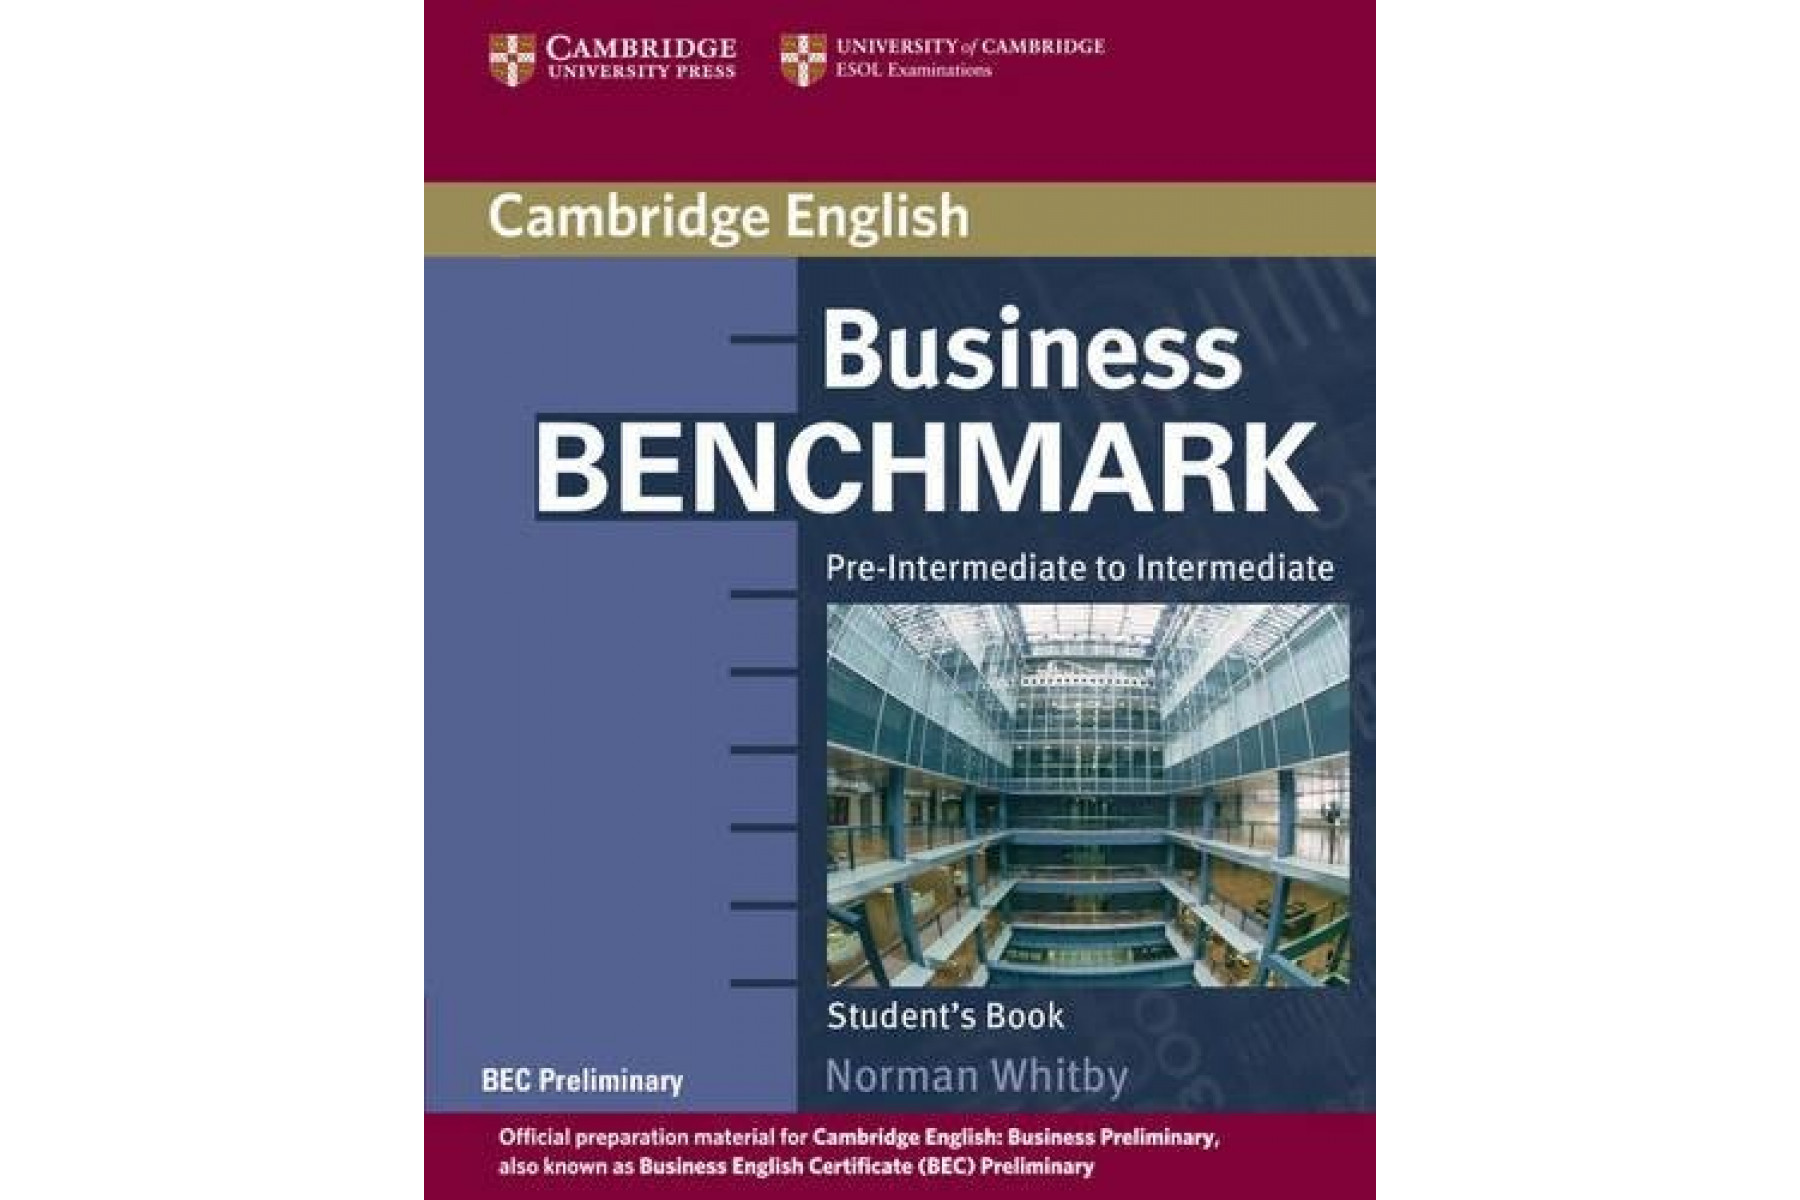 Business Benchmark Pre-Intermediate to Intermediate SB